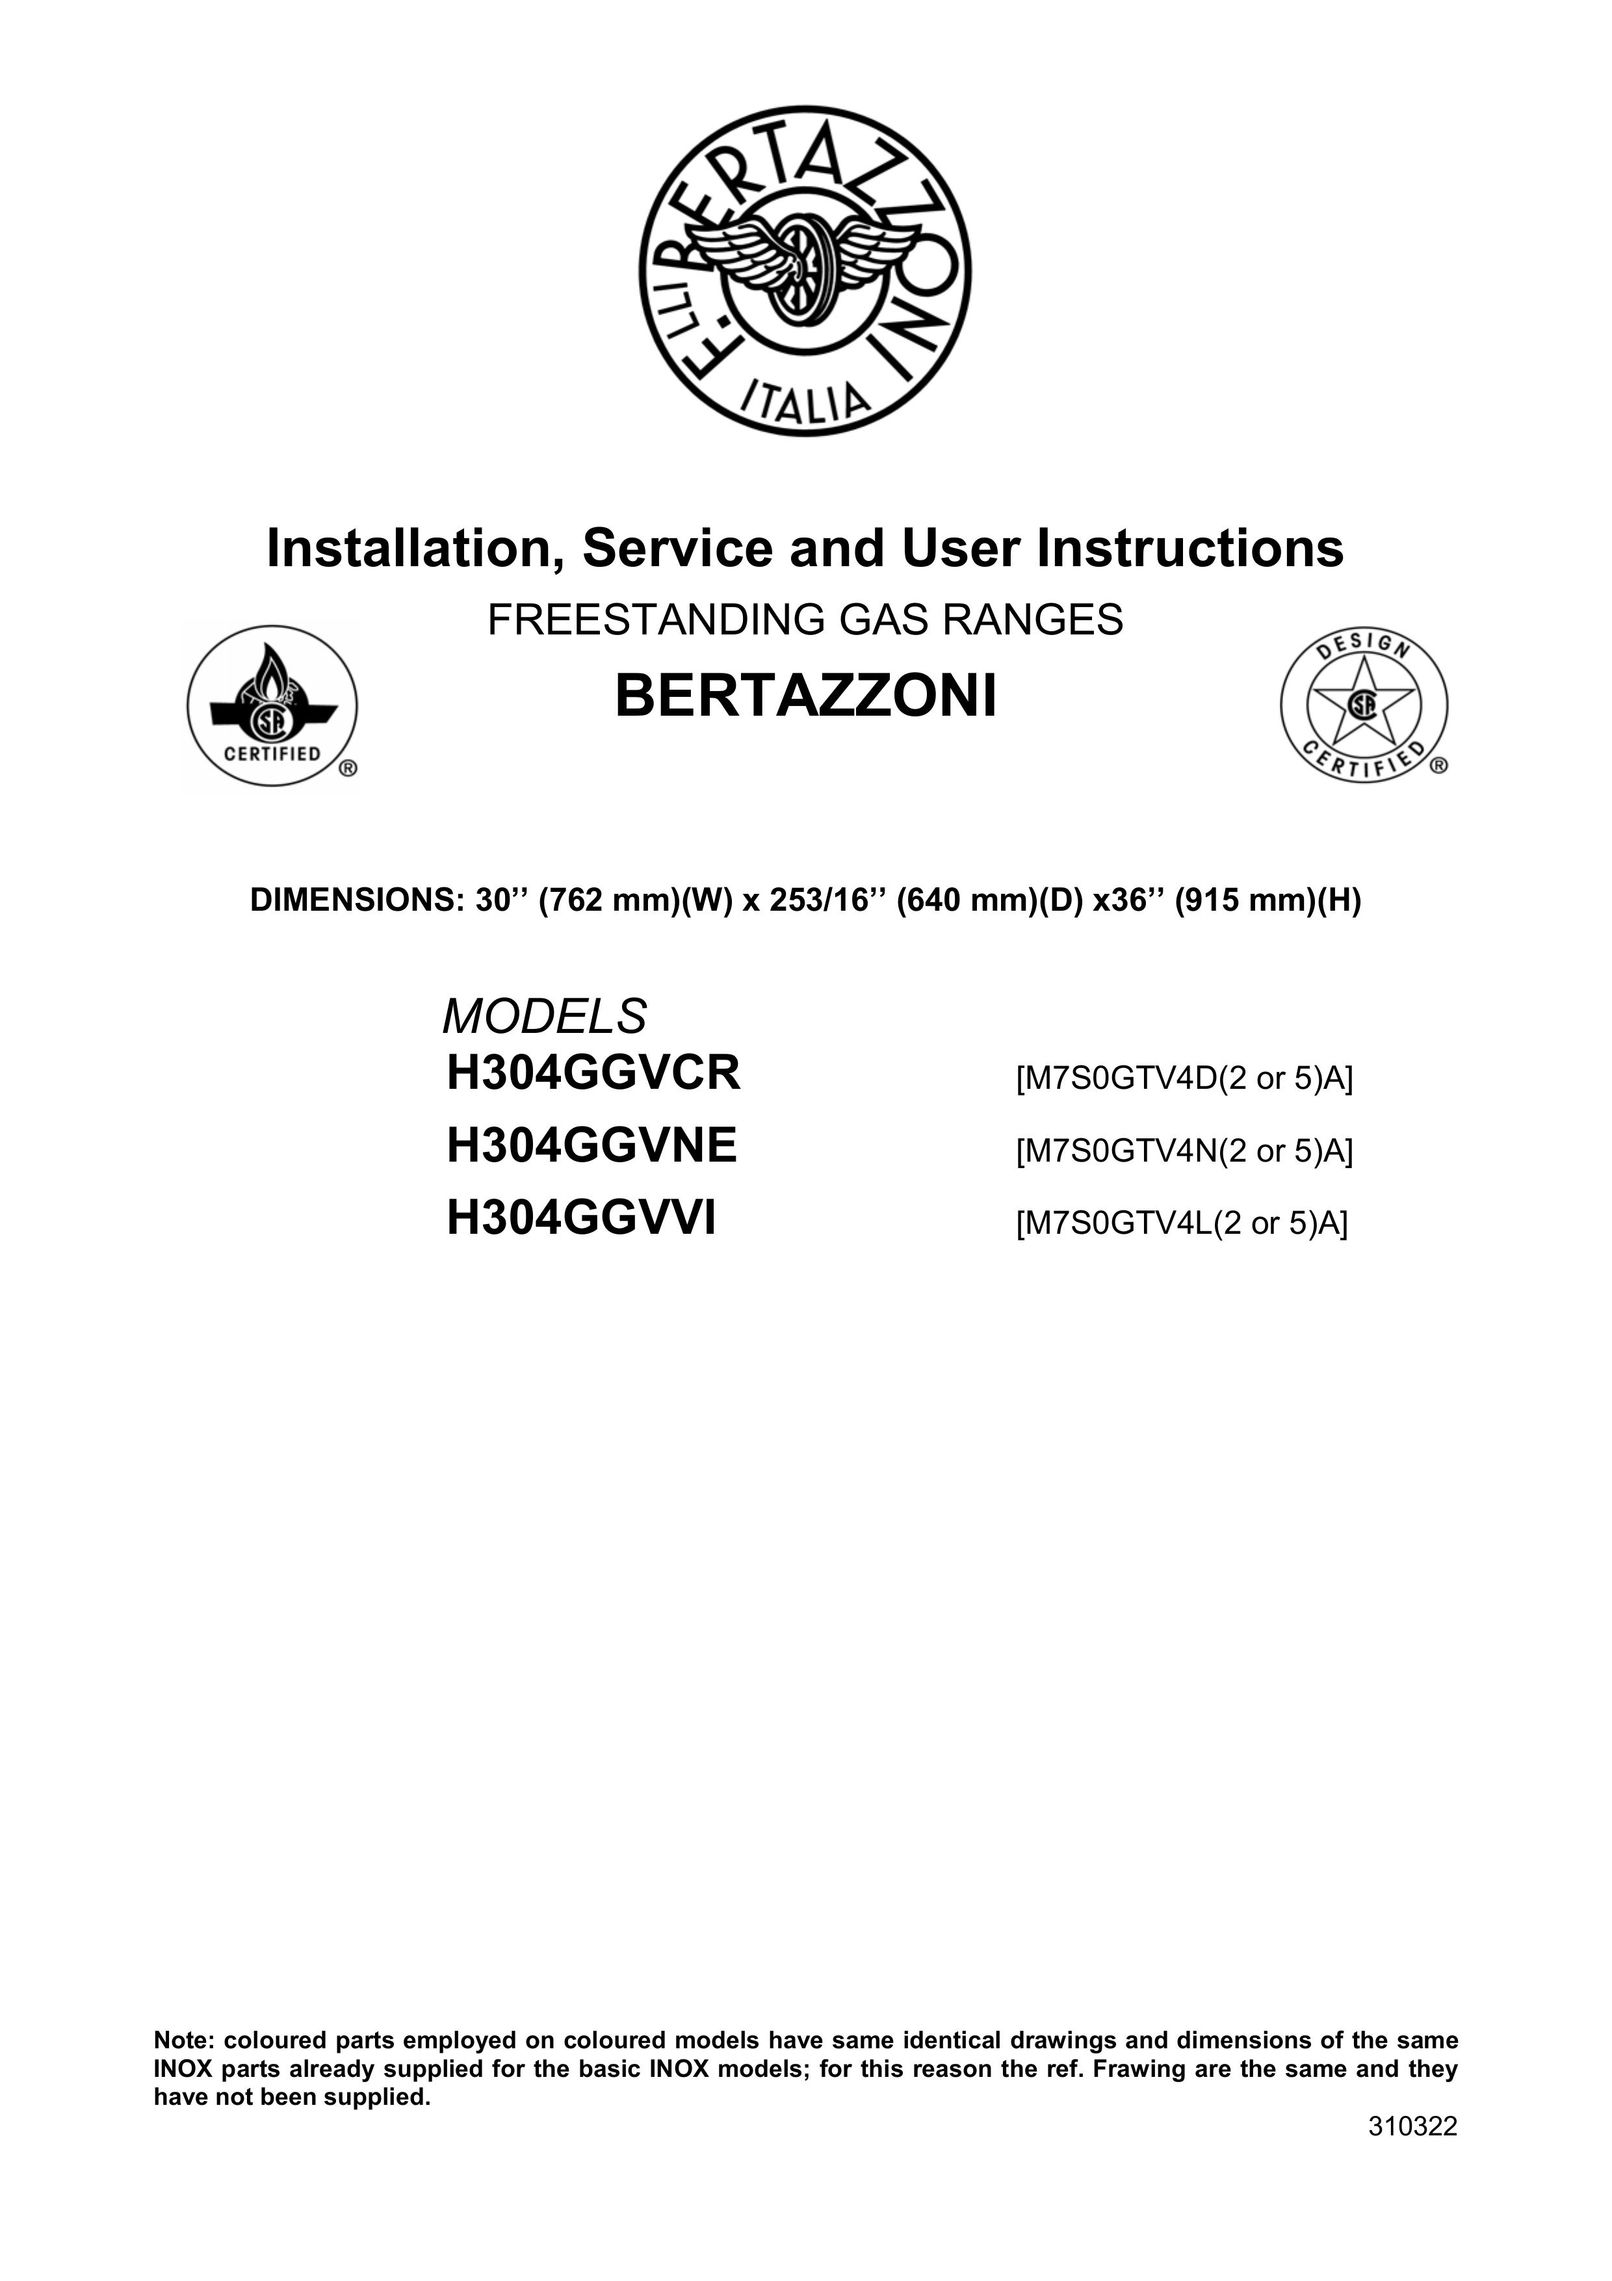 Bertazzoni H304GGVVI Range User Manual